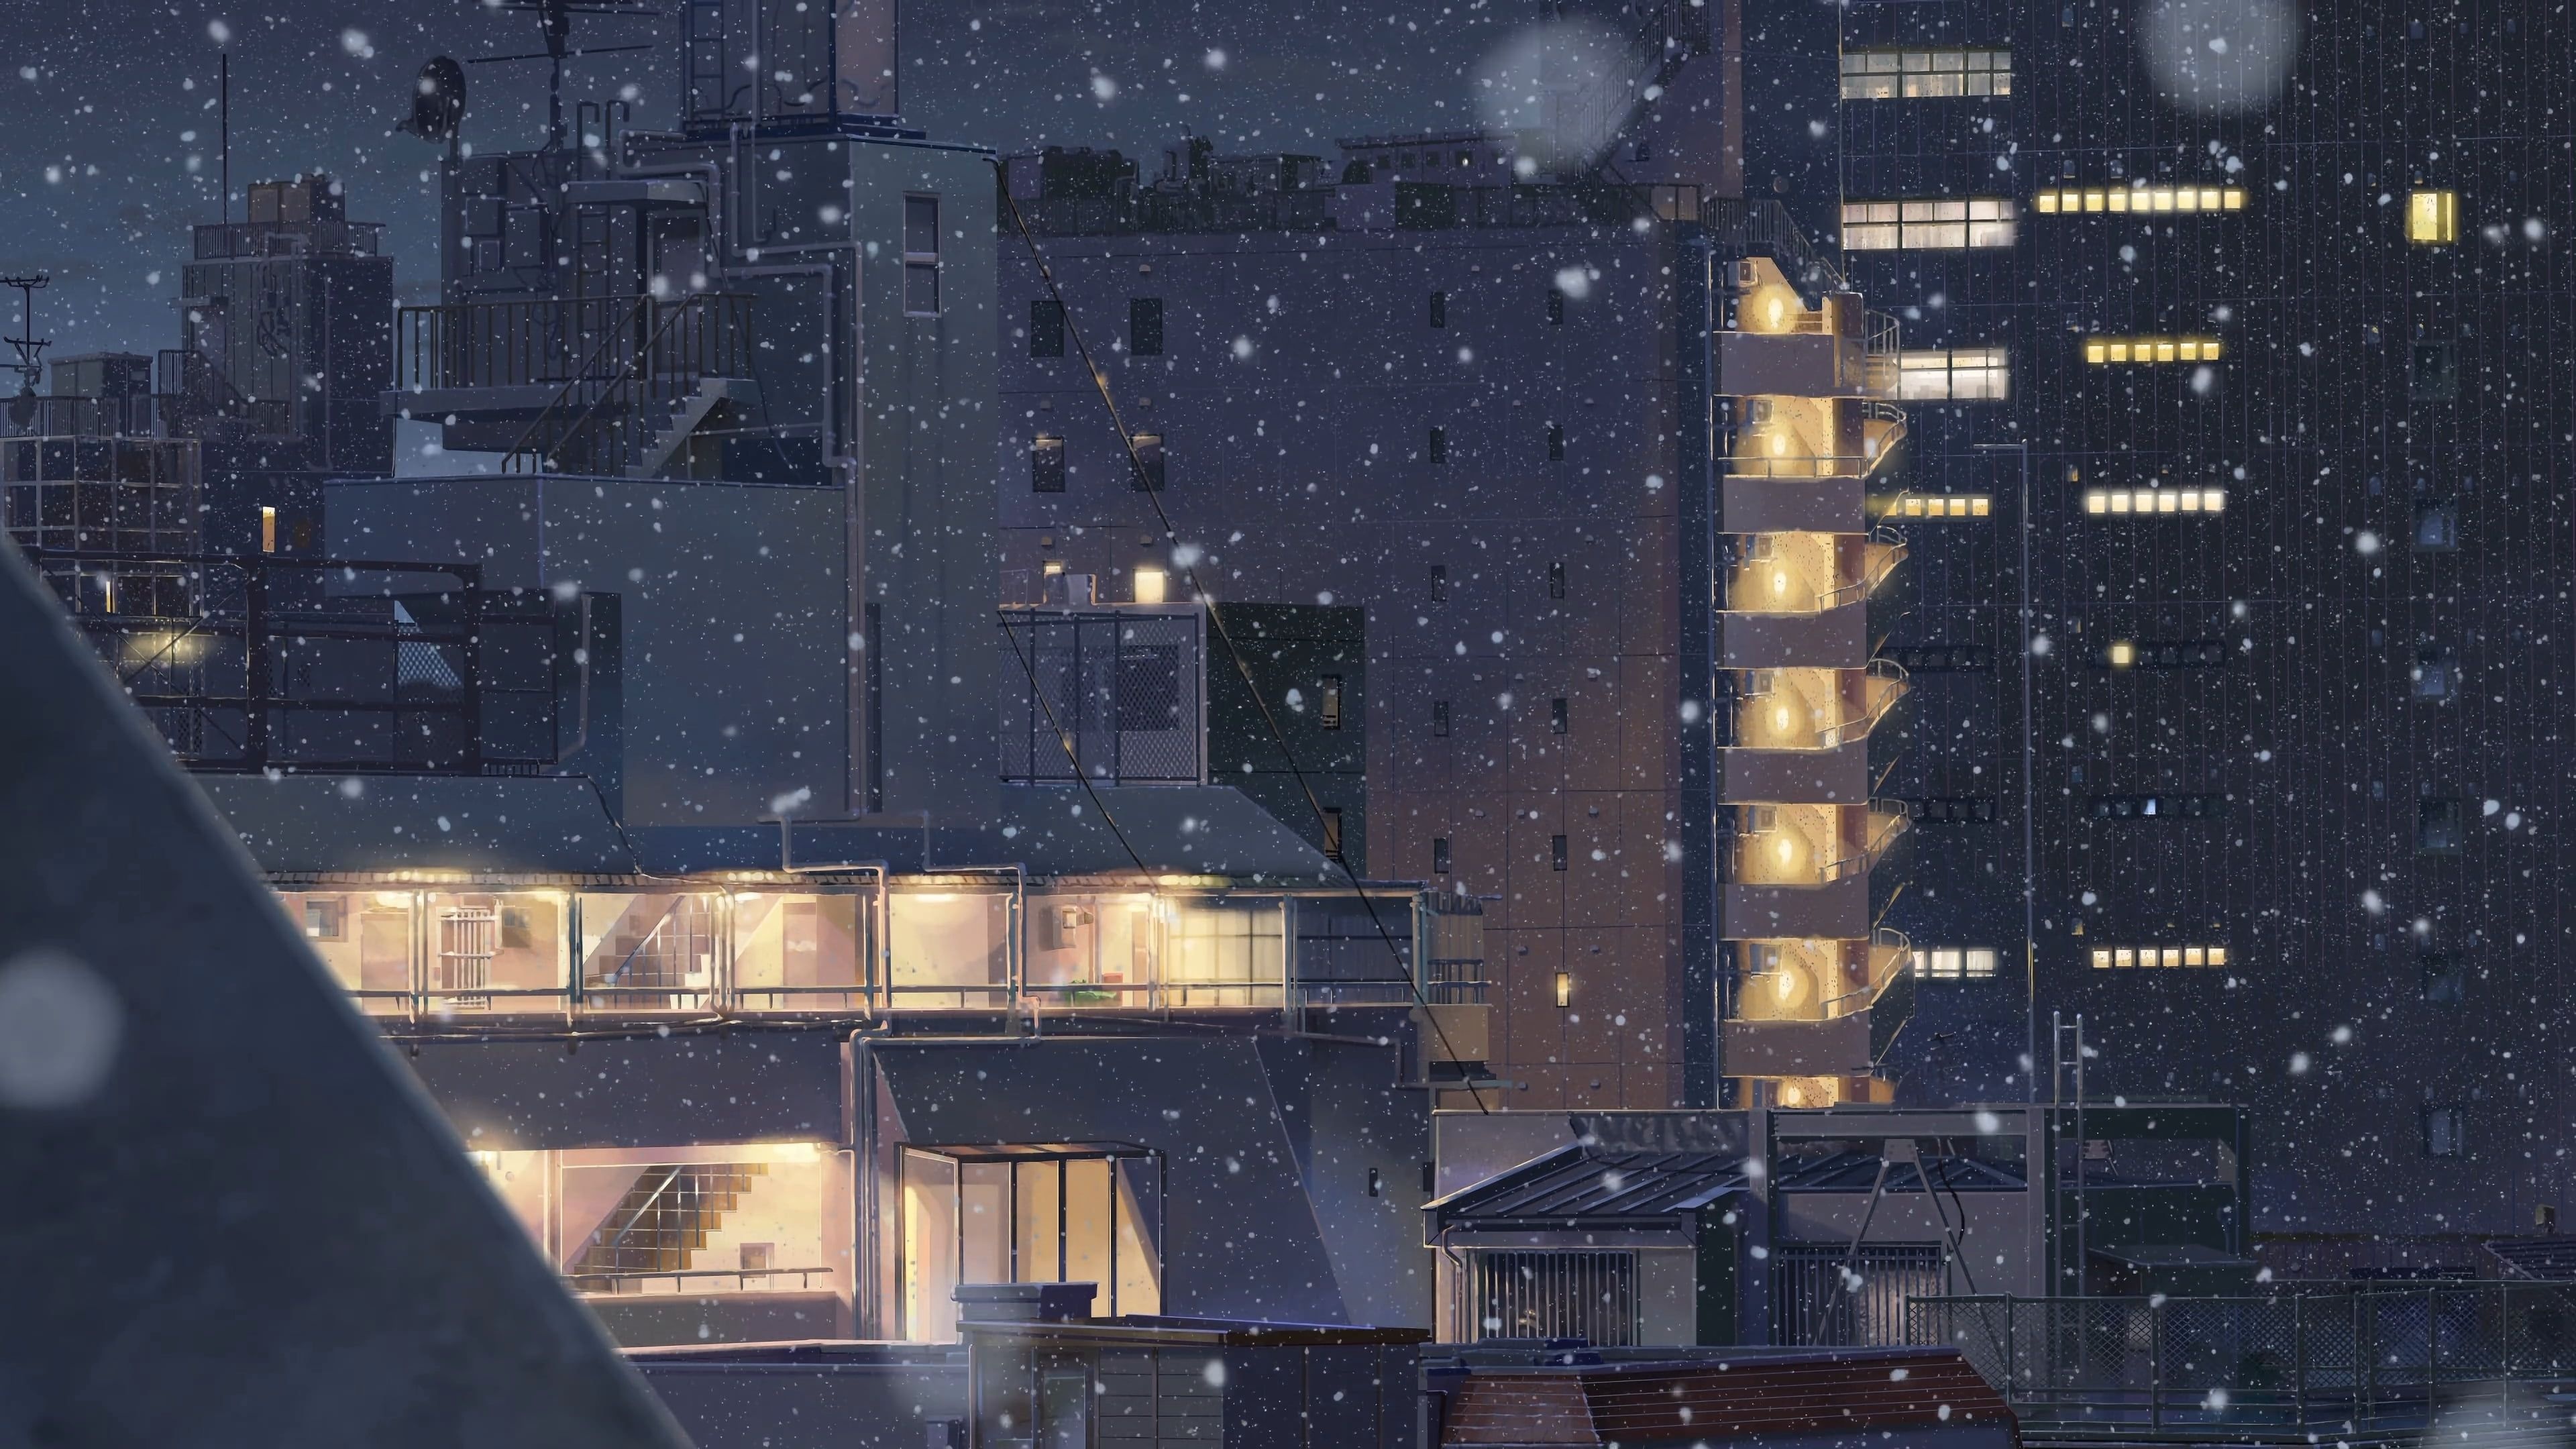 Makoto Shinkai Anime, Kimi no Na wa, 4K Wallpaper, Building Illustration, 3840x2160 4K Desktop